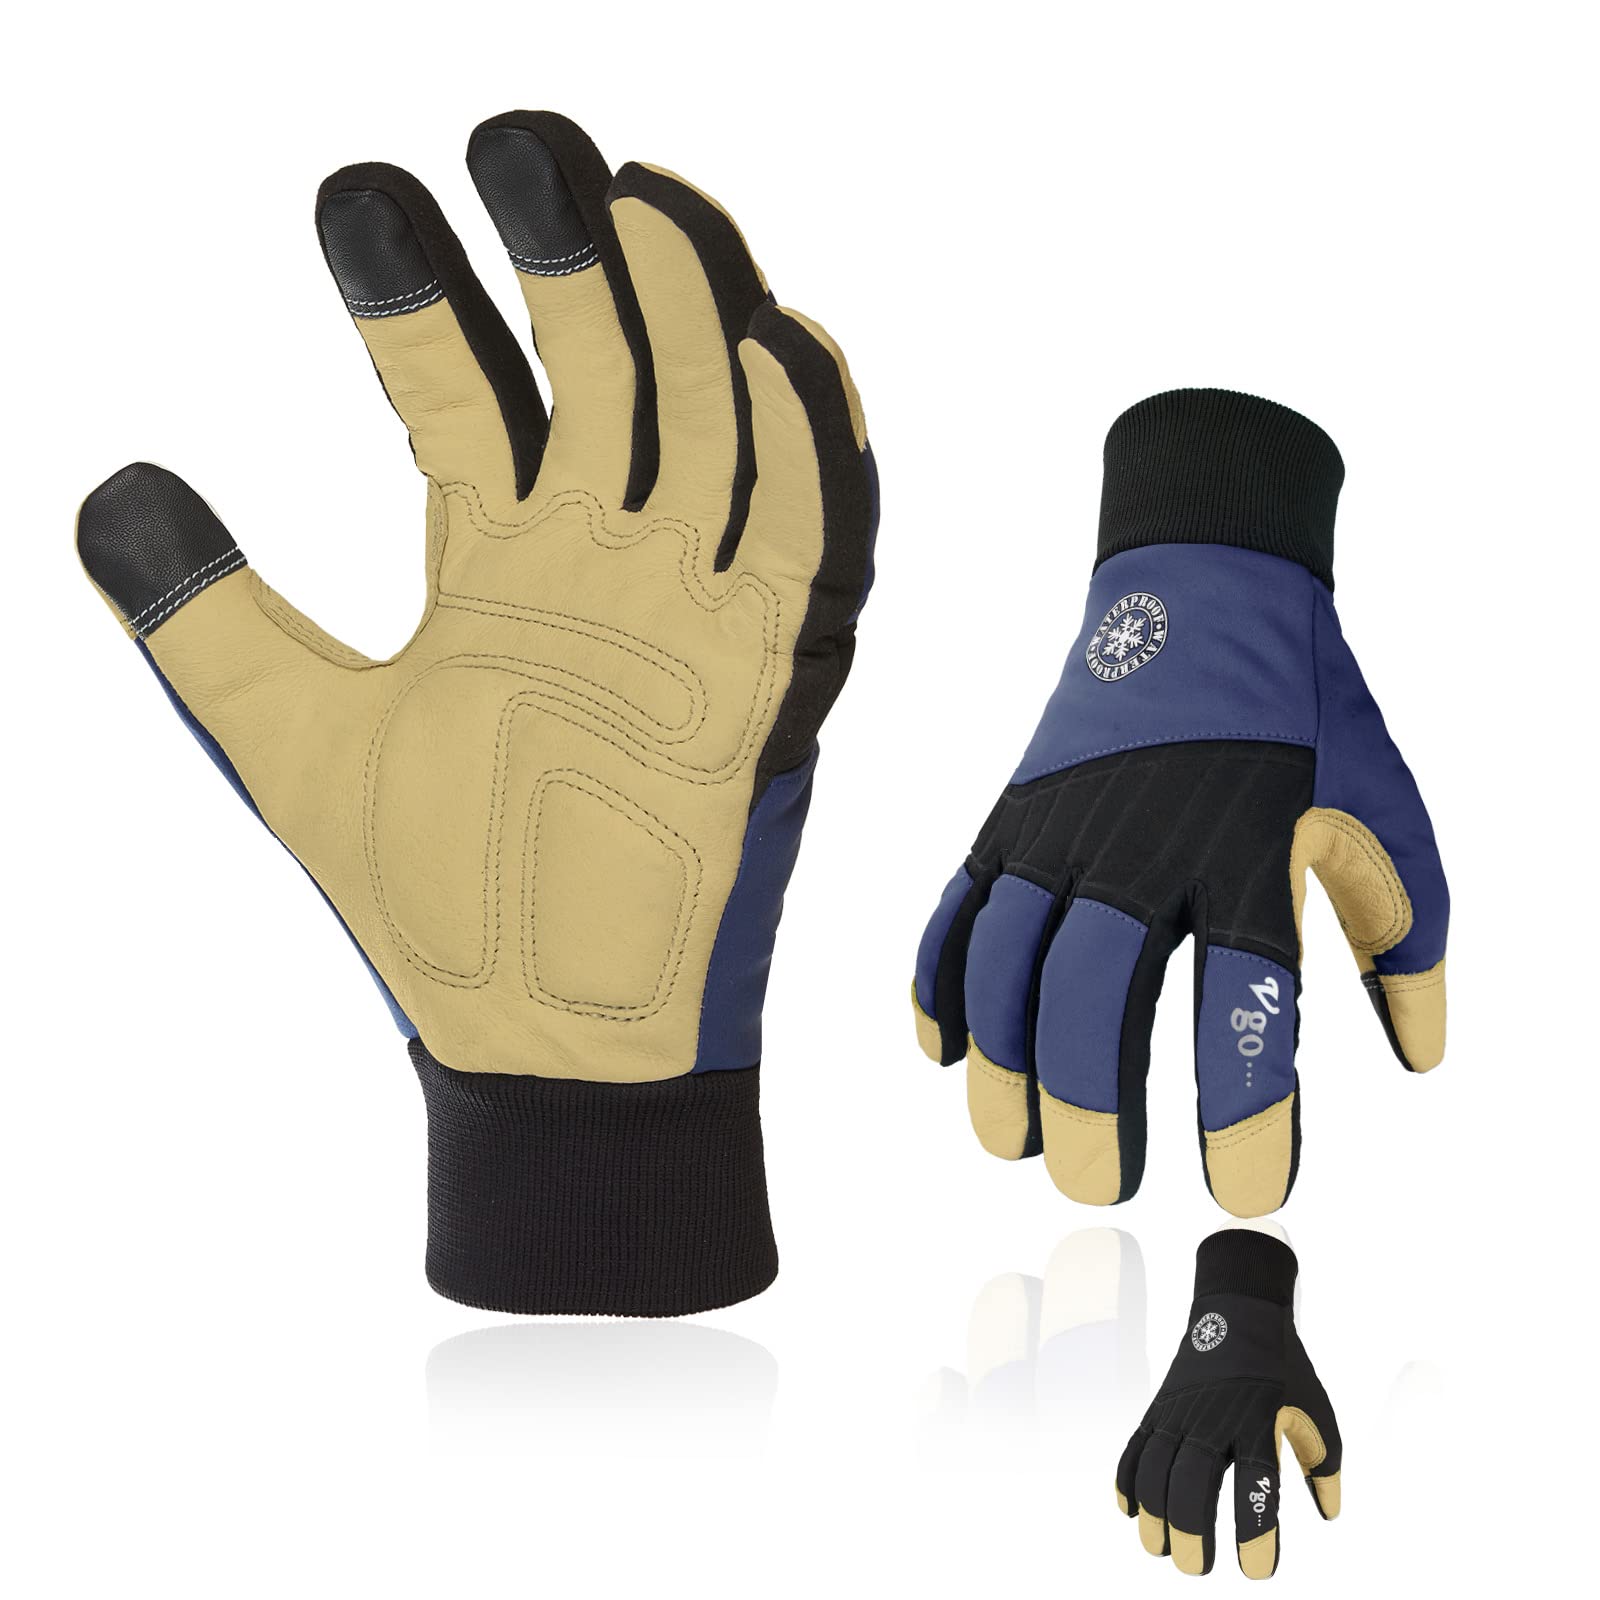 Vgo... Vgo 2-Pairs 32 or above Lined Winter Premium Pigskin Leather Waterproof Work gloves (Size M, Black&Dark Blue, PA1015FW)